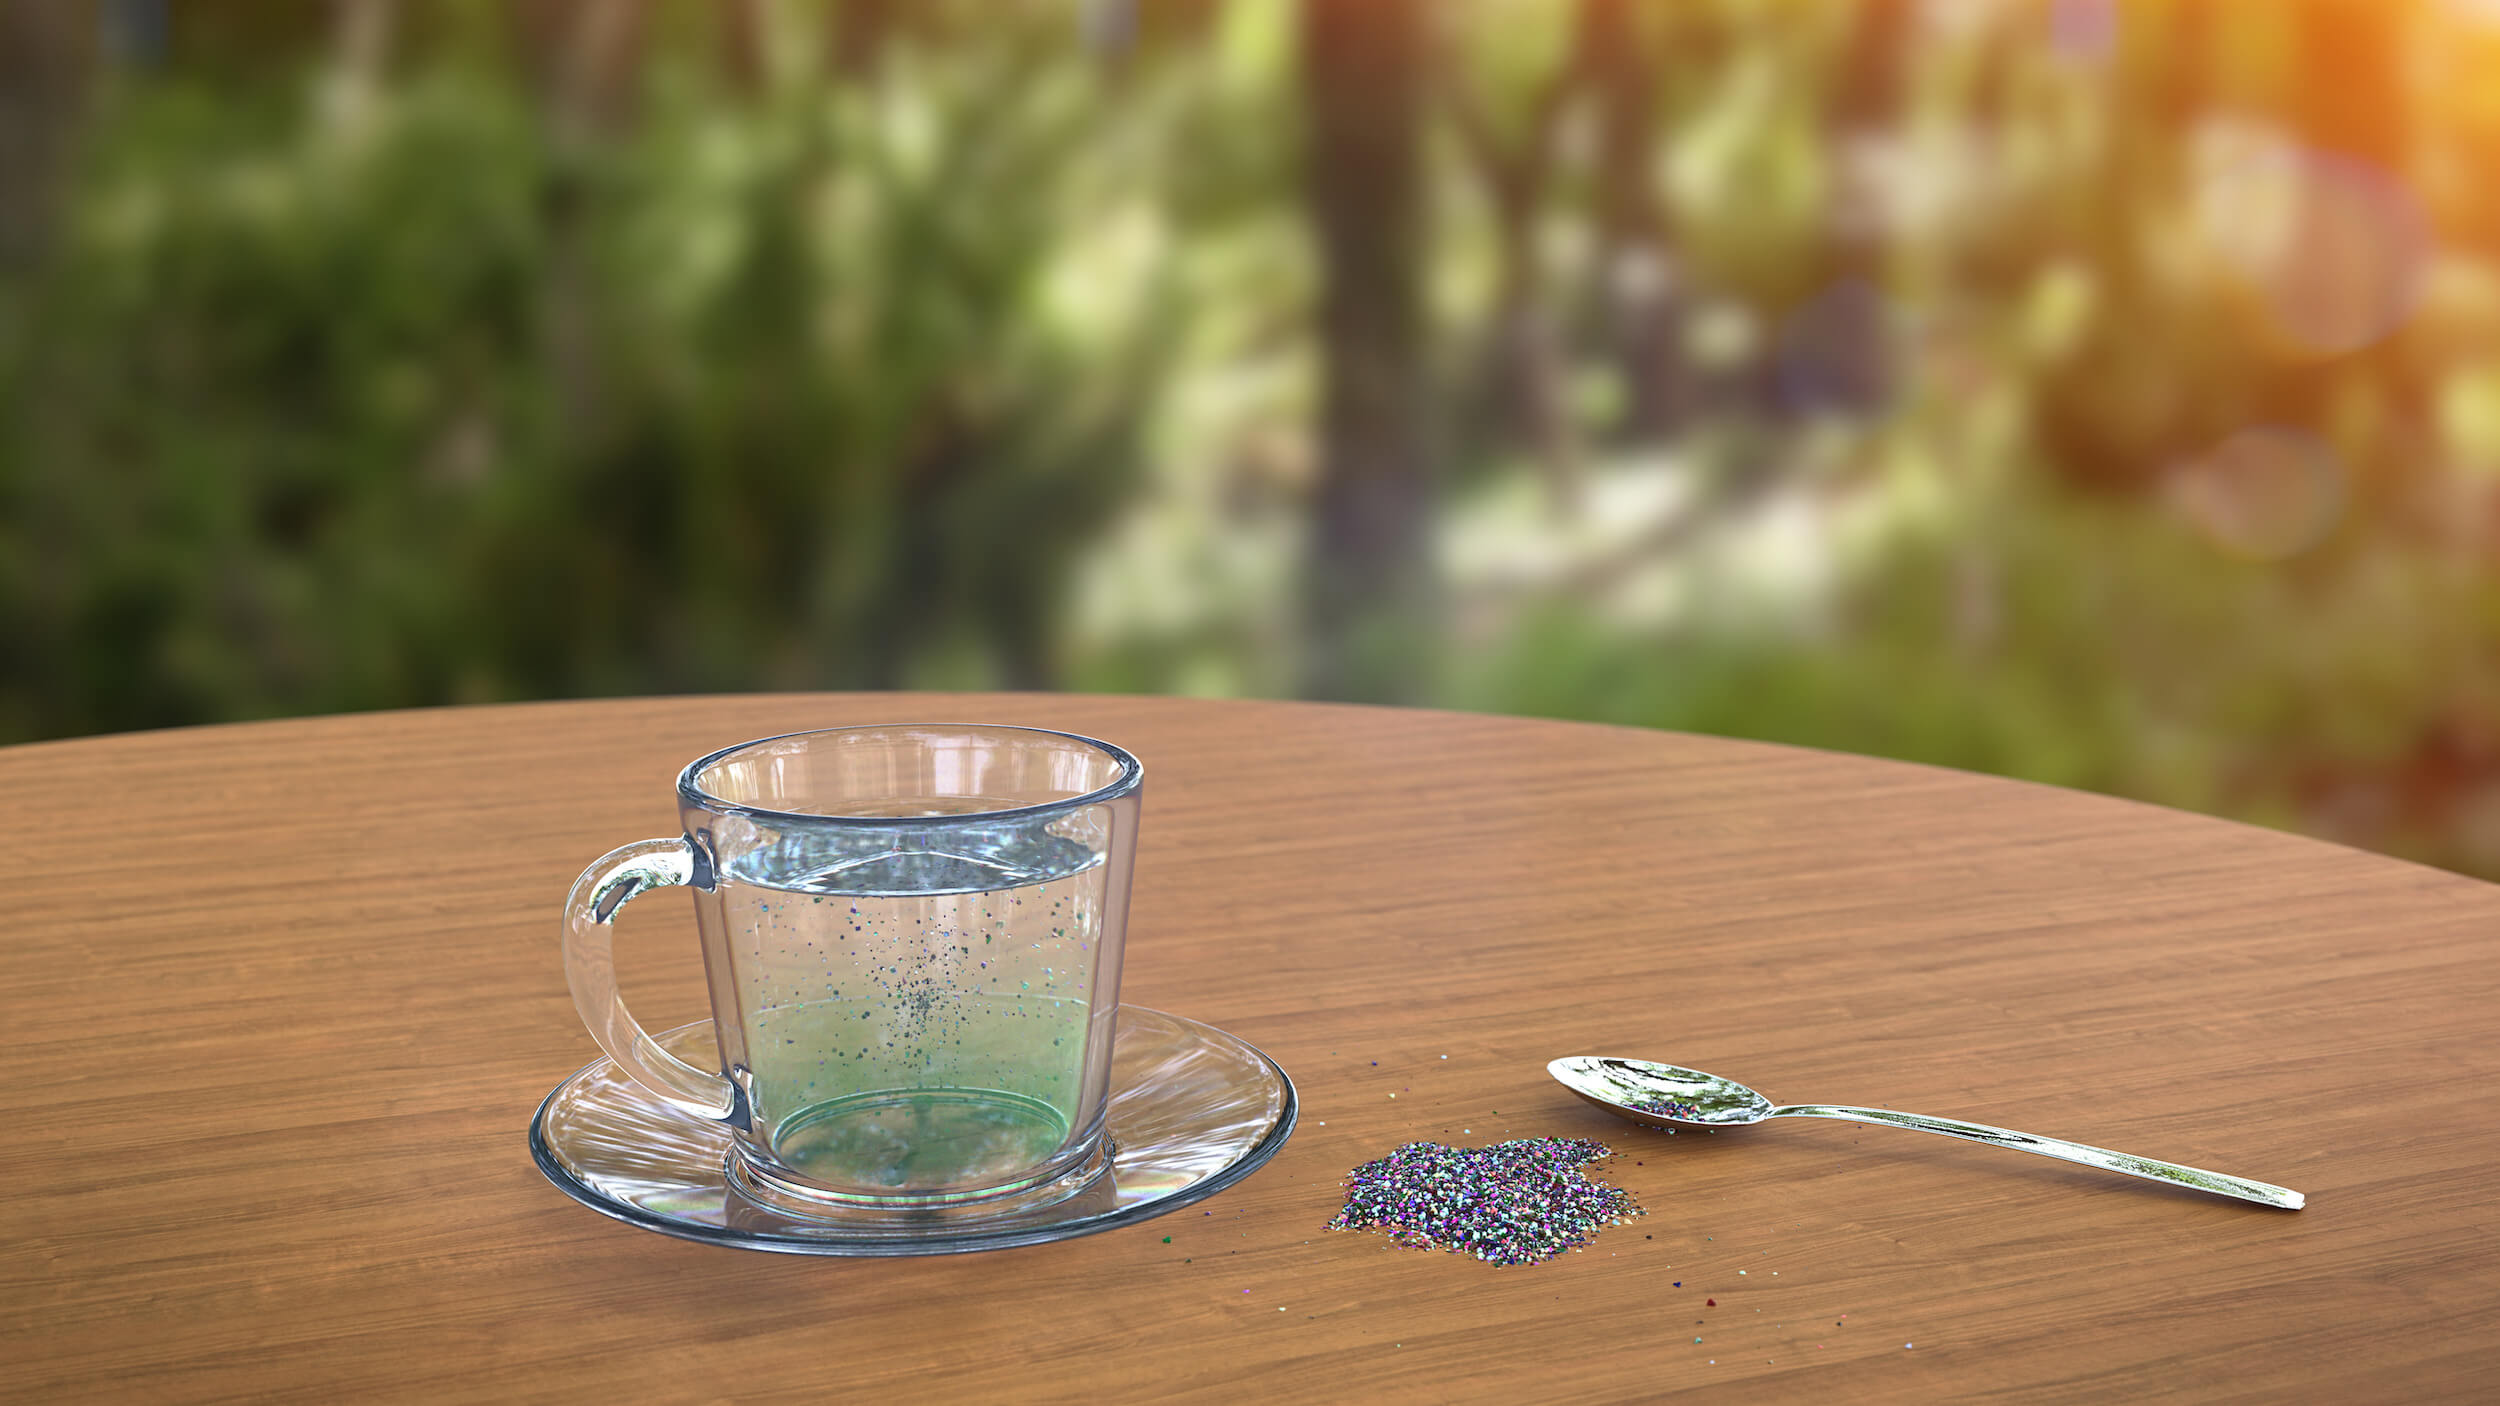 Microplastics in a cup of tea.